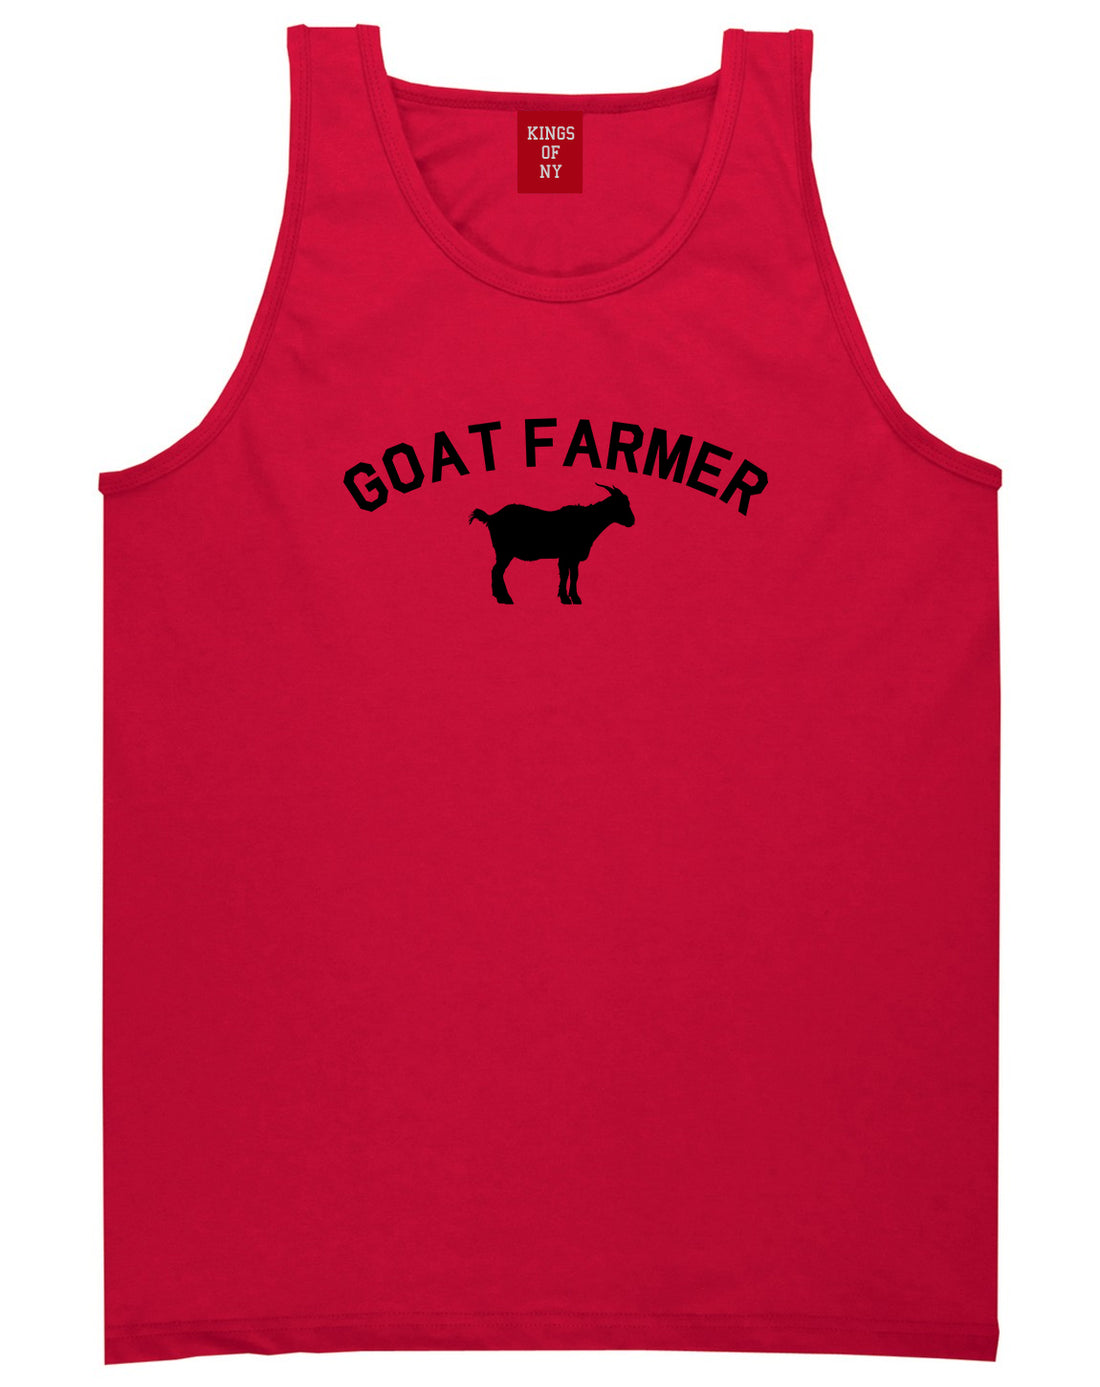 Goat Farmer Mens Red Tank Top Shirt by KINGS OF NY